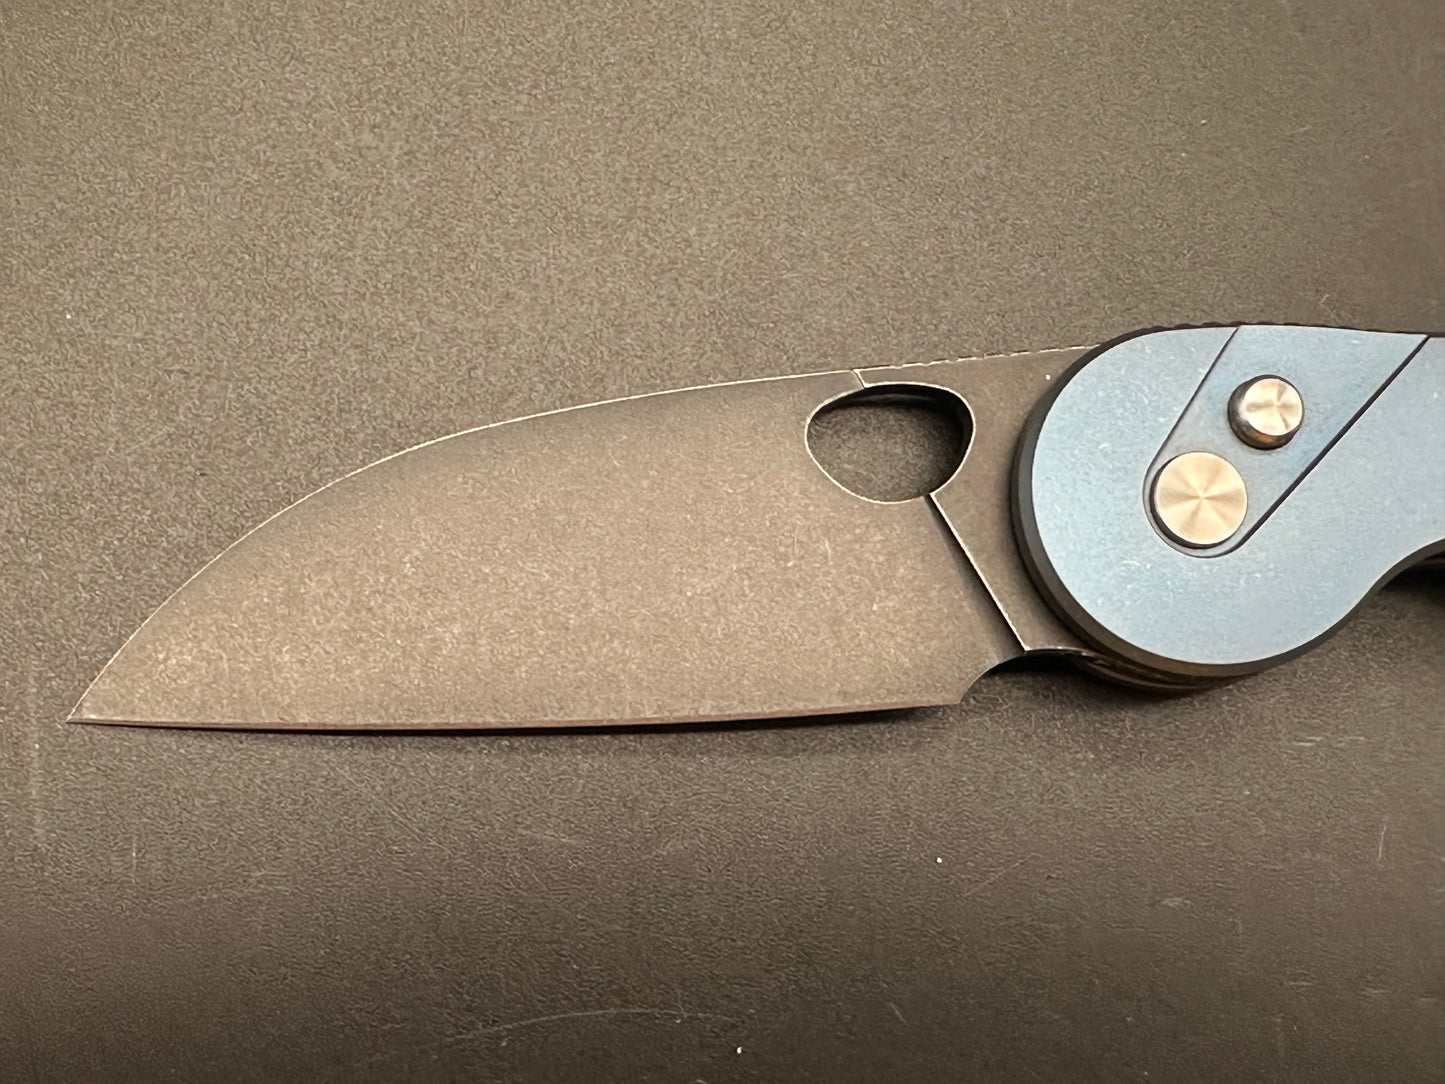 Indiana Knives EDZ blue titanium w/Magnacut blade